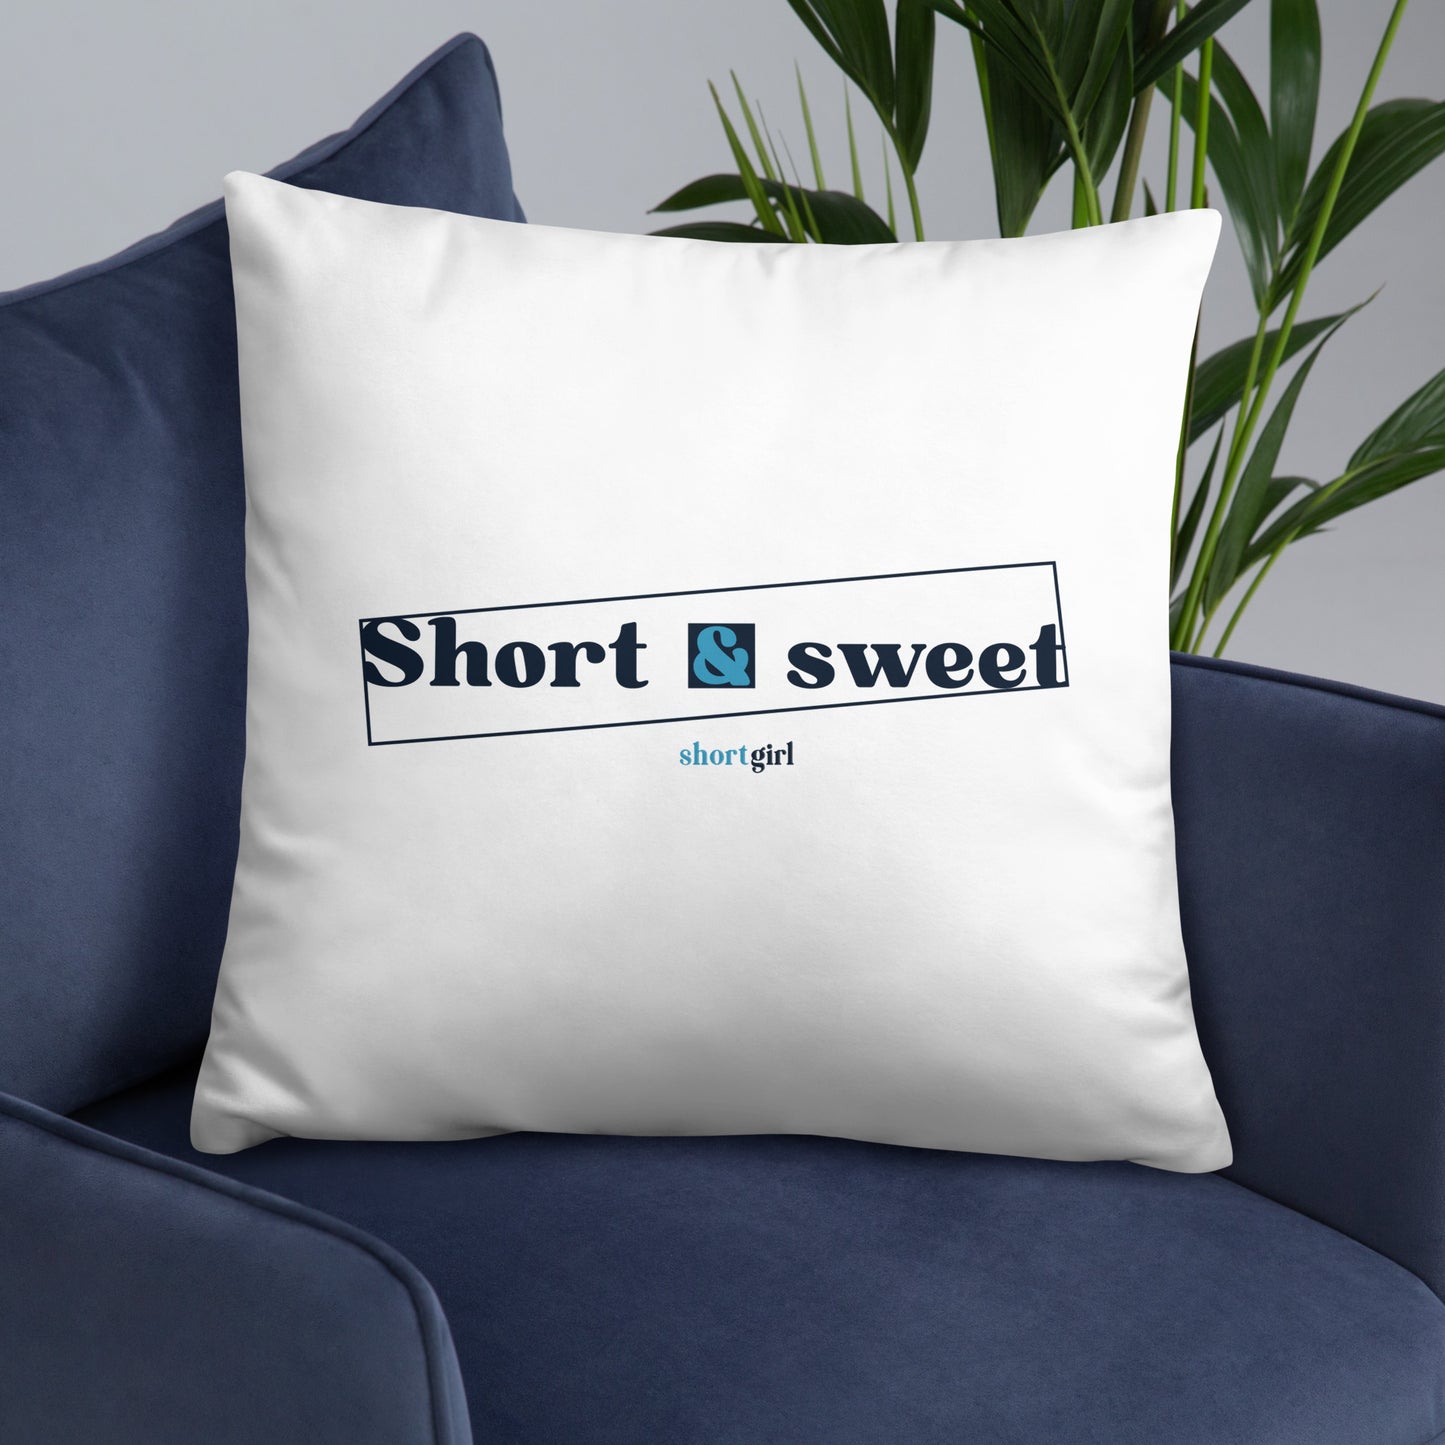 Basic Pillow - Short & sweet